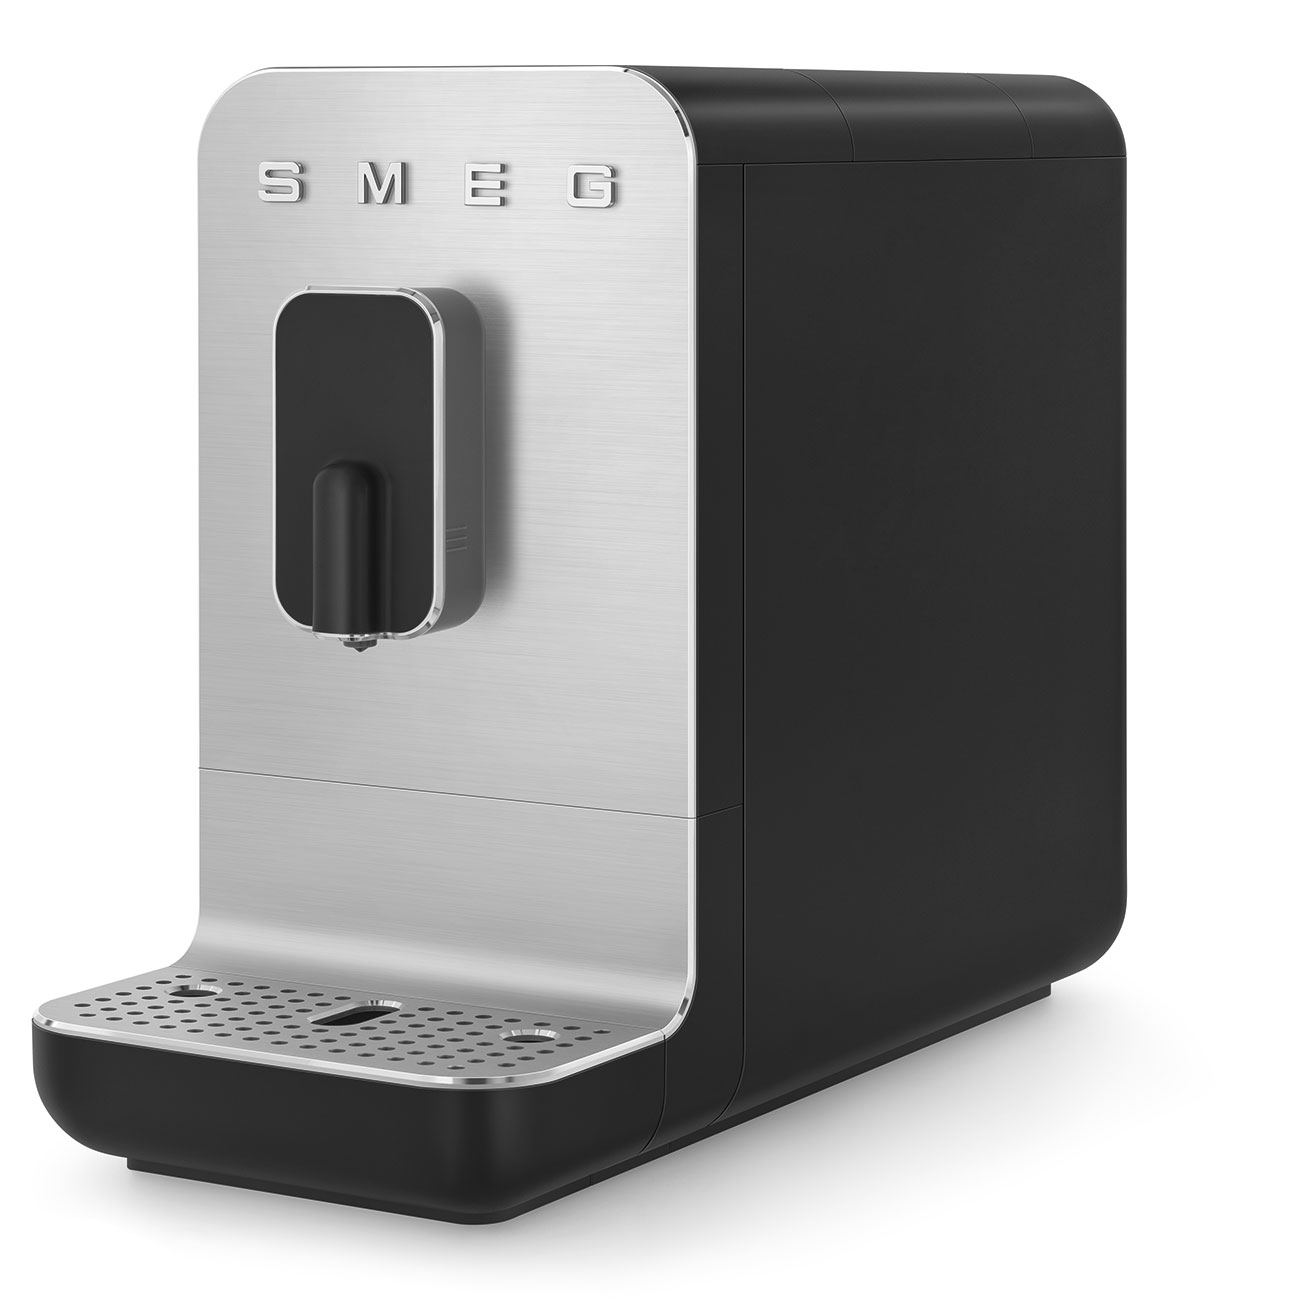 Smeg Black Espresso Manual Coffee Machine_4